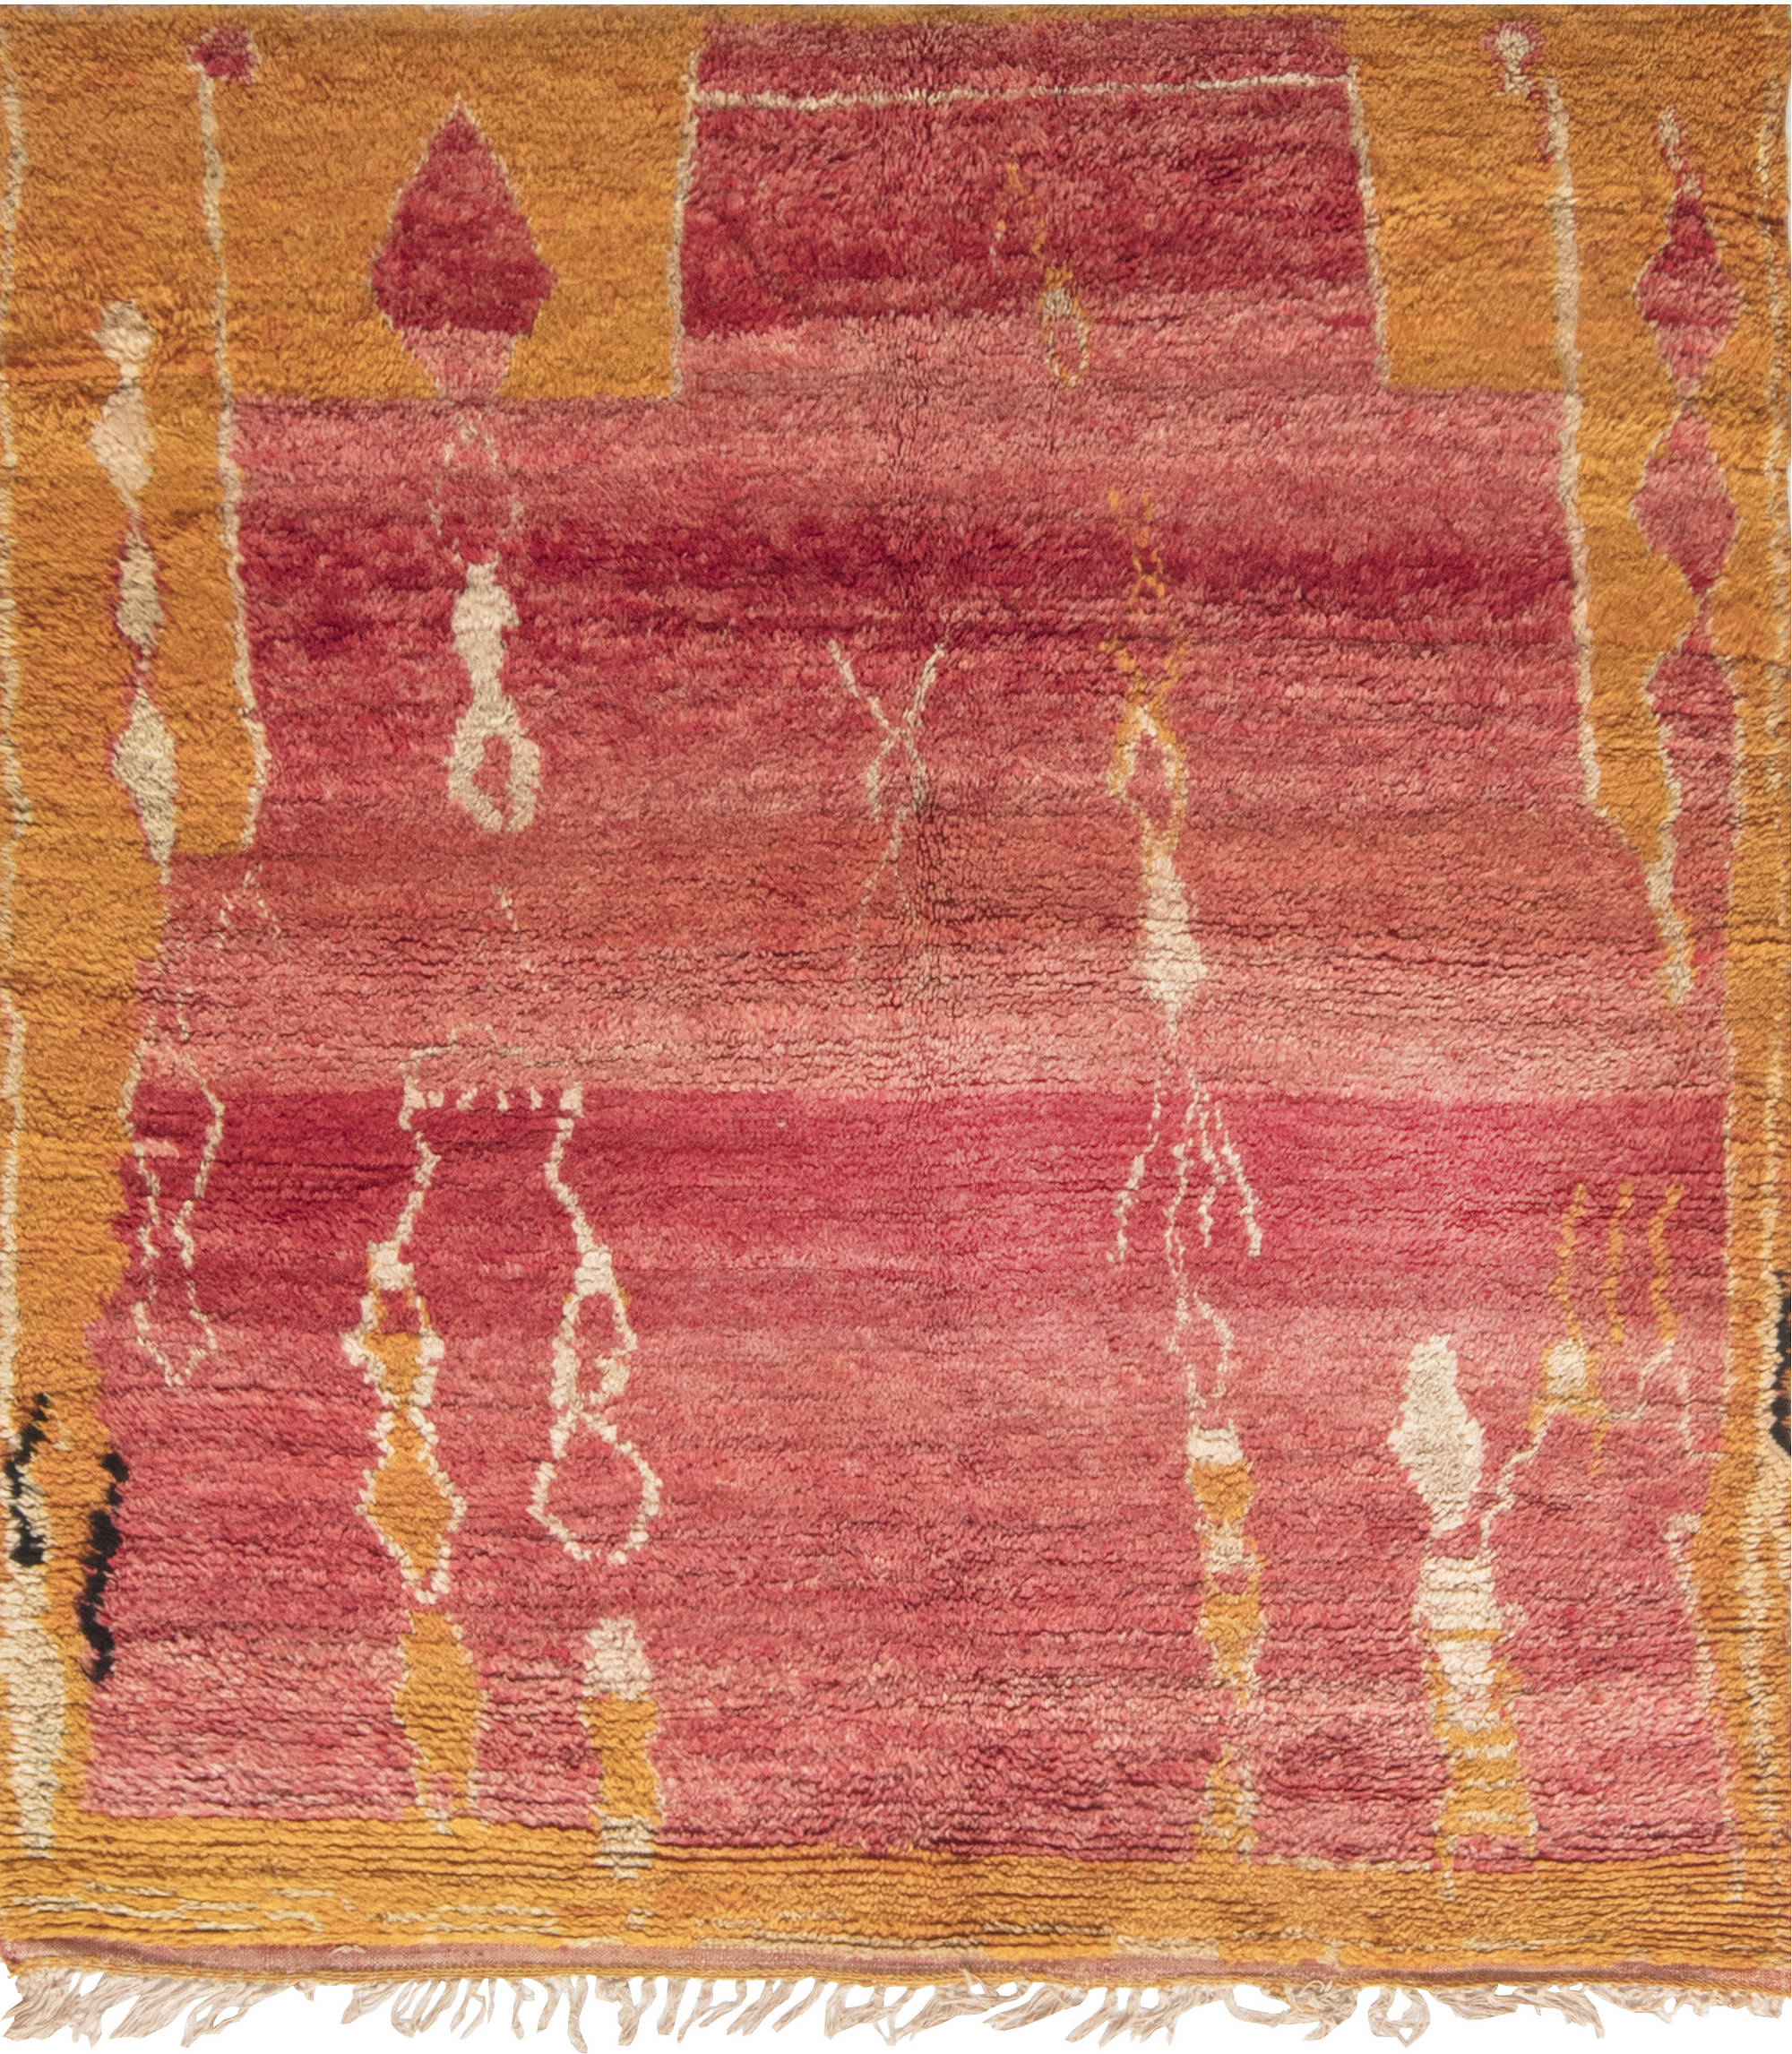 https://www.dorisleslieblau.com/wp-content/uploads/2018/07/vintage-carpet-moroccan-multi-color-6x5-bb6880.jpg